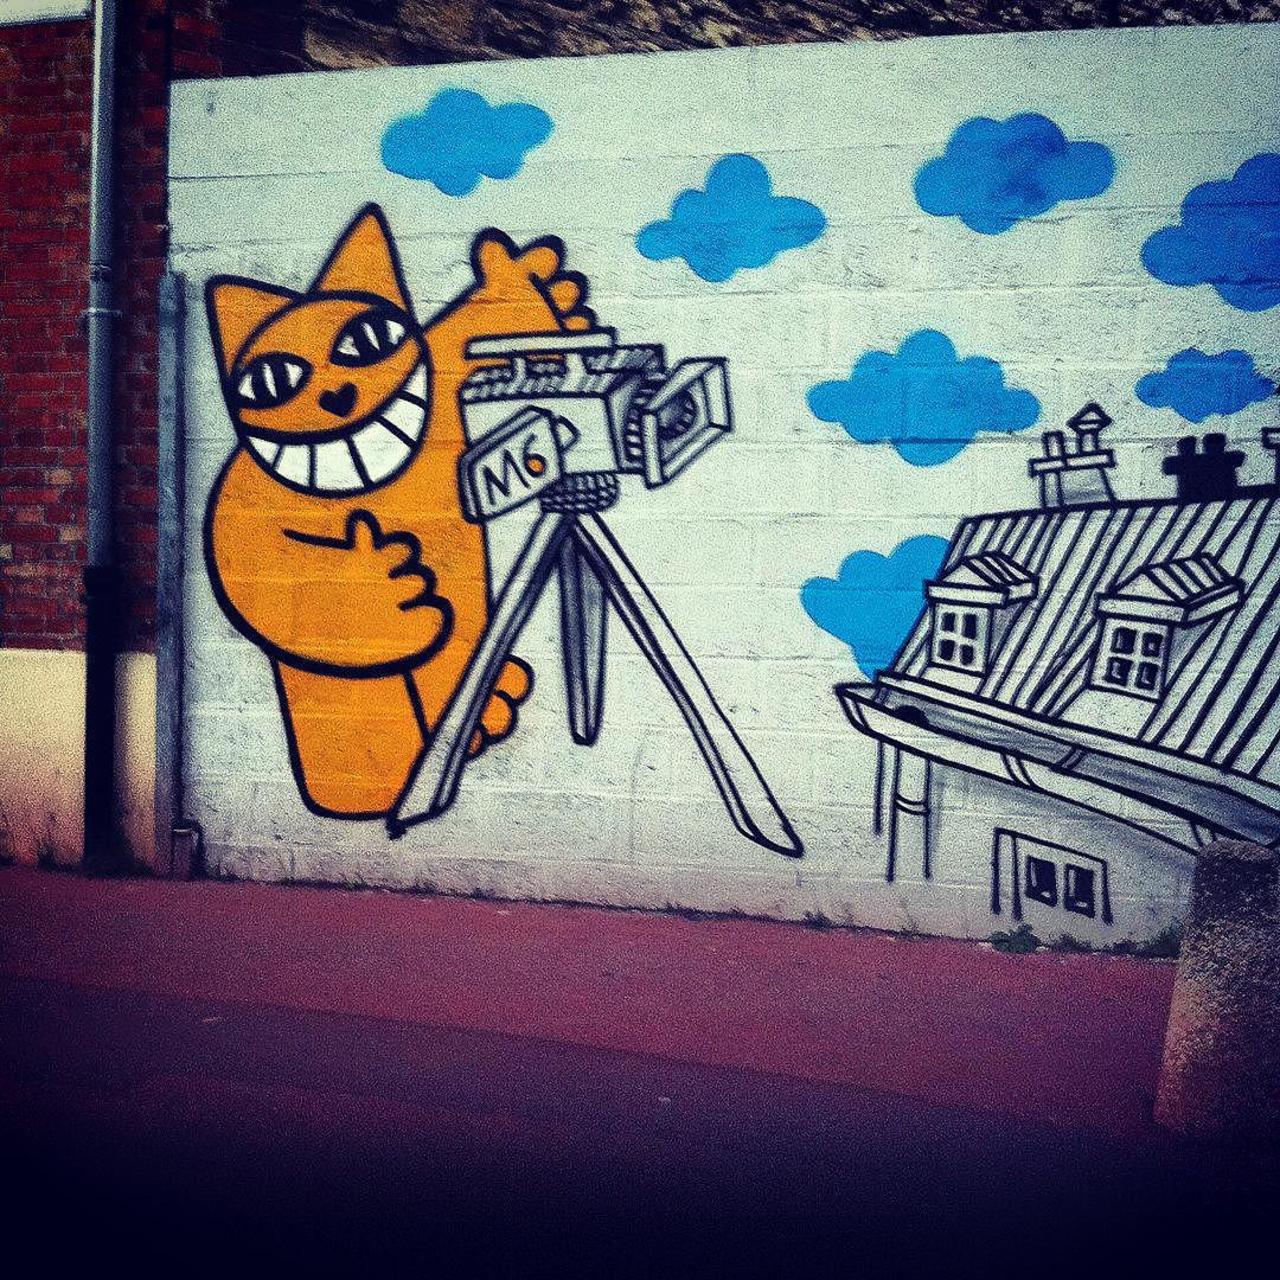 #Paris #graffiti photo by @anne__sofy http://ift.tt/1hvCSG5 #StreetArt http://t.co/Z4i9IYnSMt